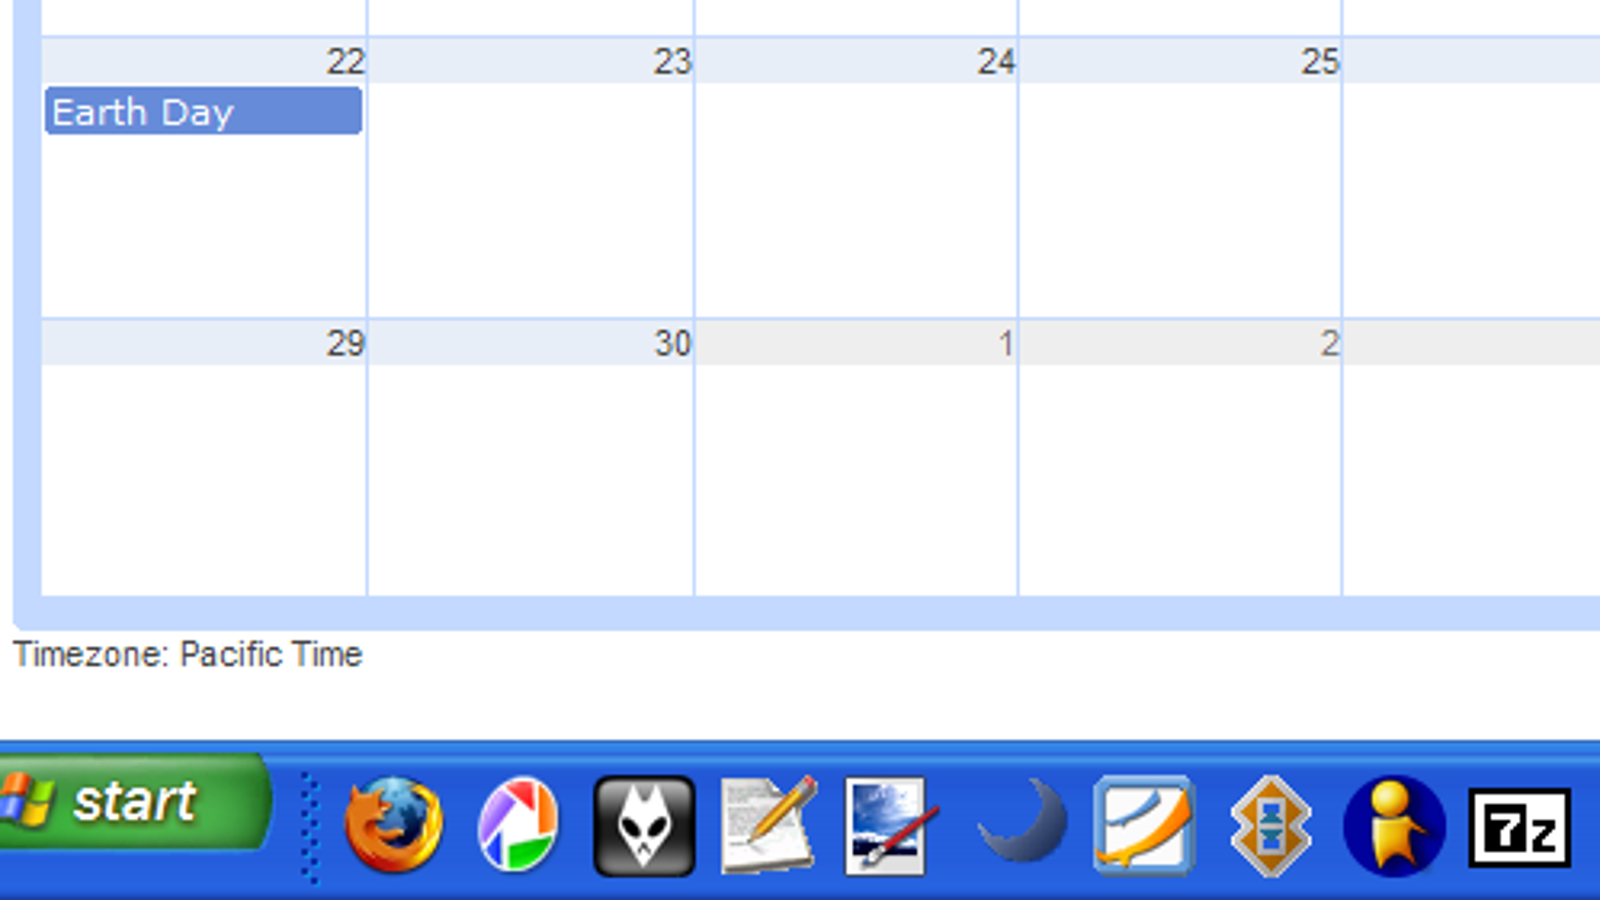 download google calendar for macbook pro